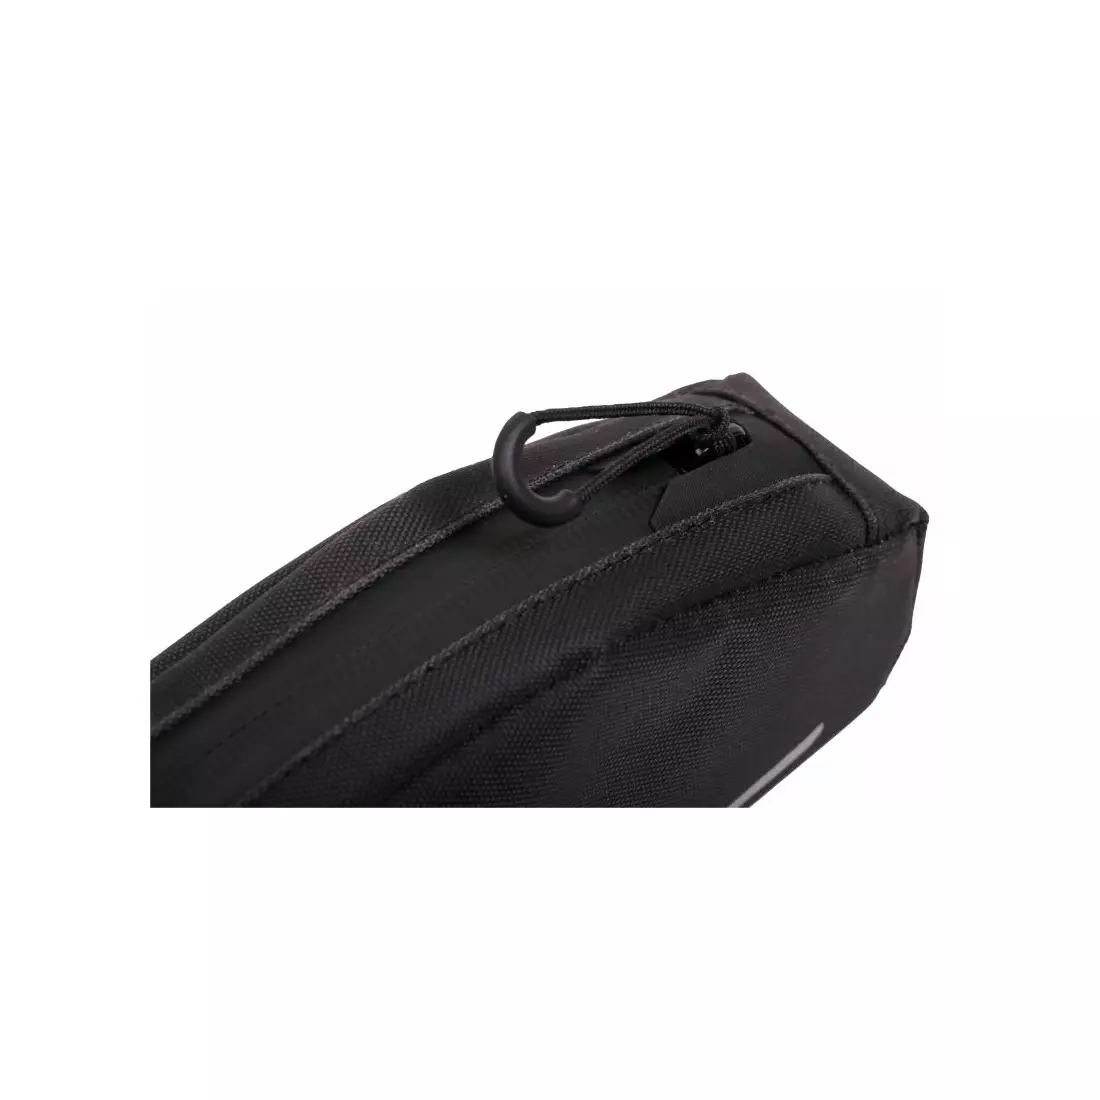 ZEFAL waterproof frame bag Z AERO black